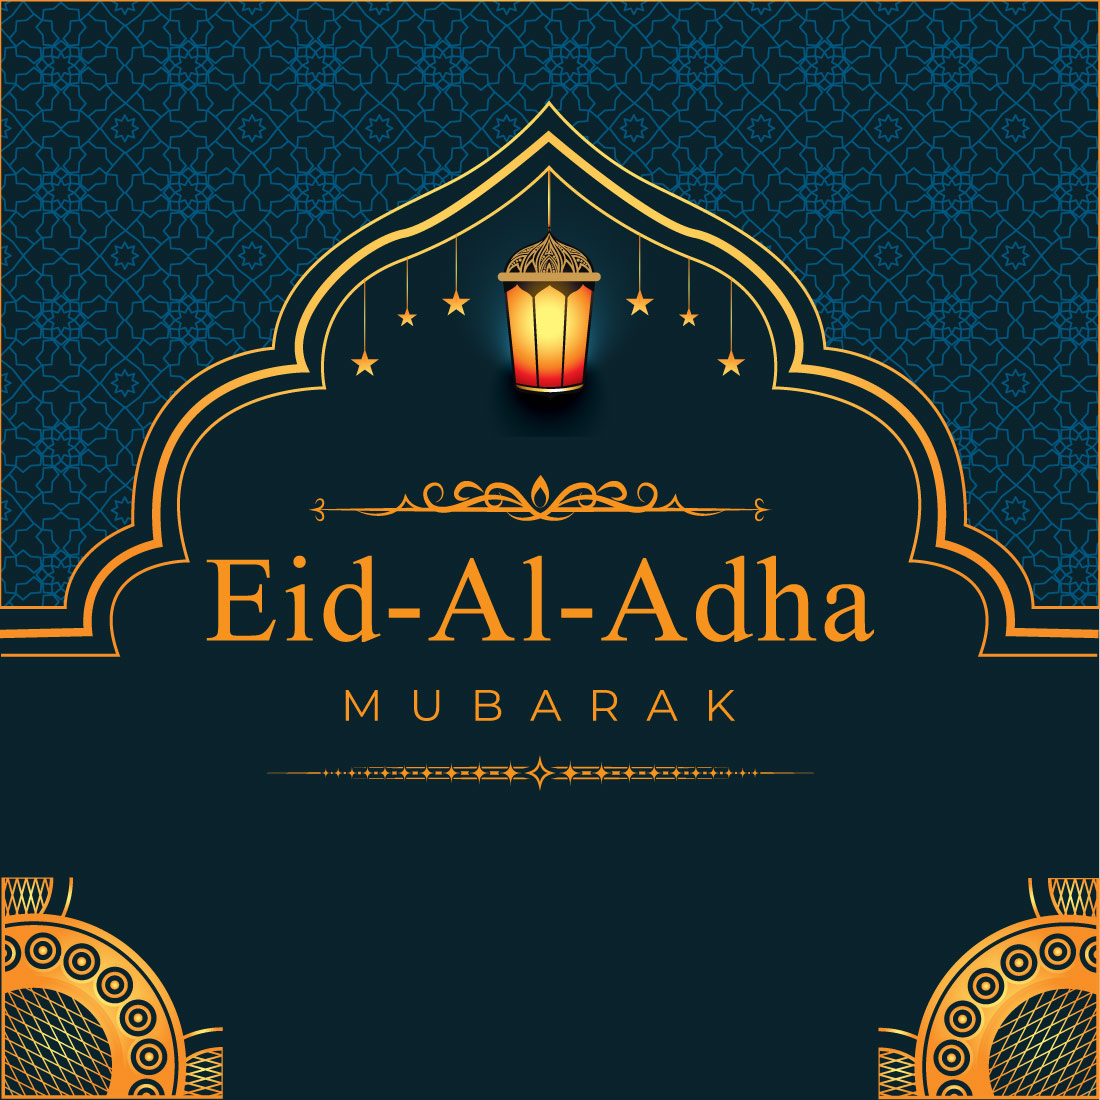 Eid Al Adha Social Media Poster Design cover image.